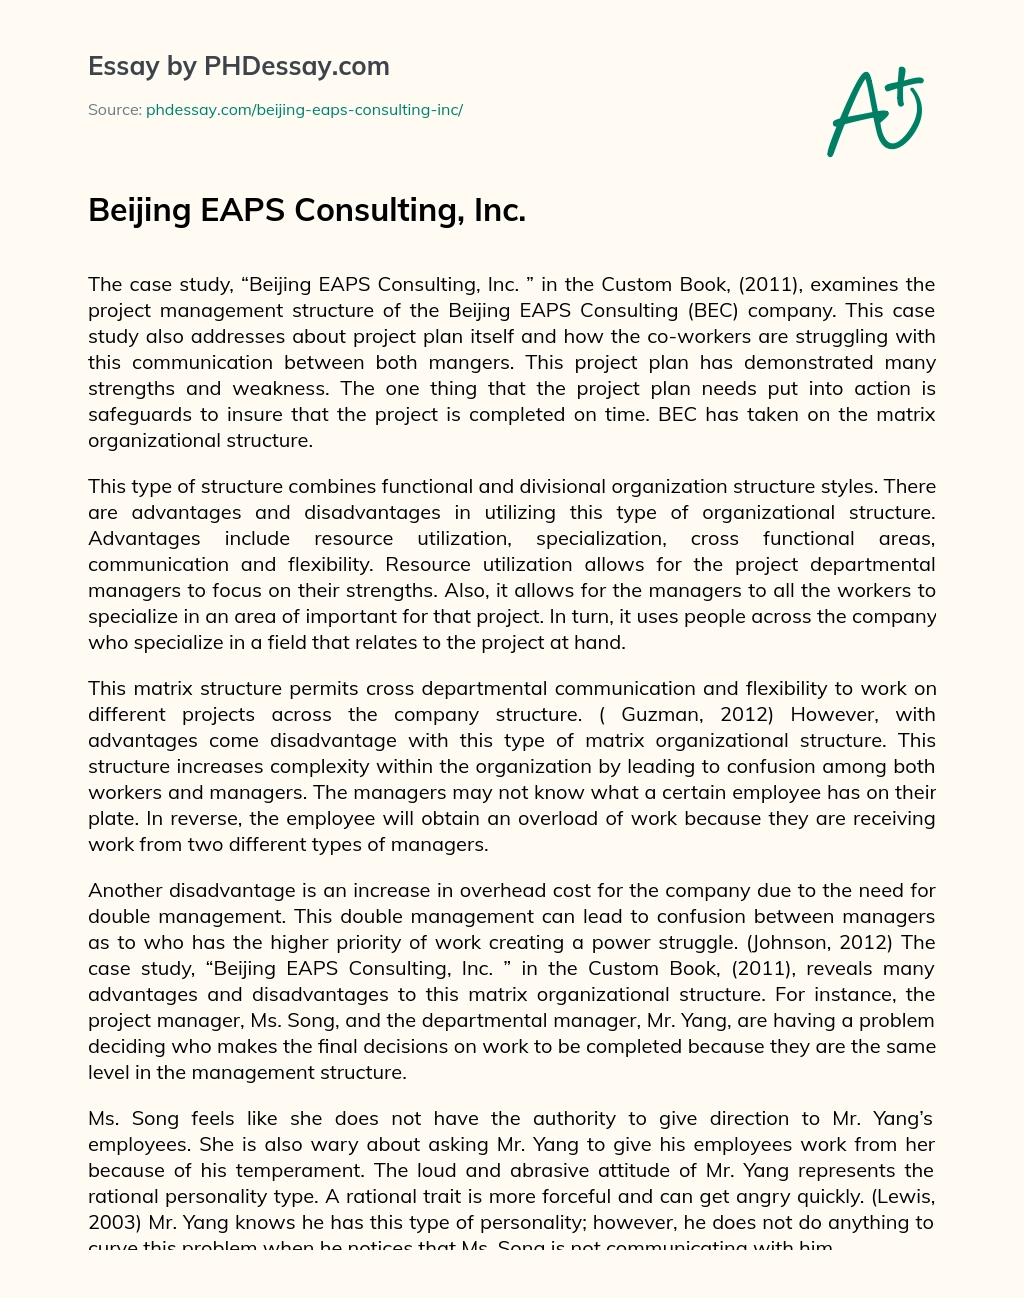 Beijing EAPS Consulting, Inc. essay